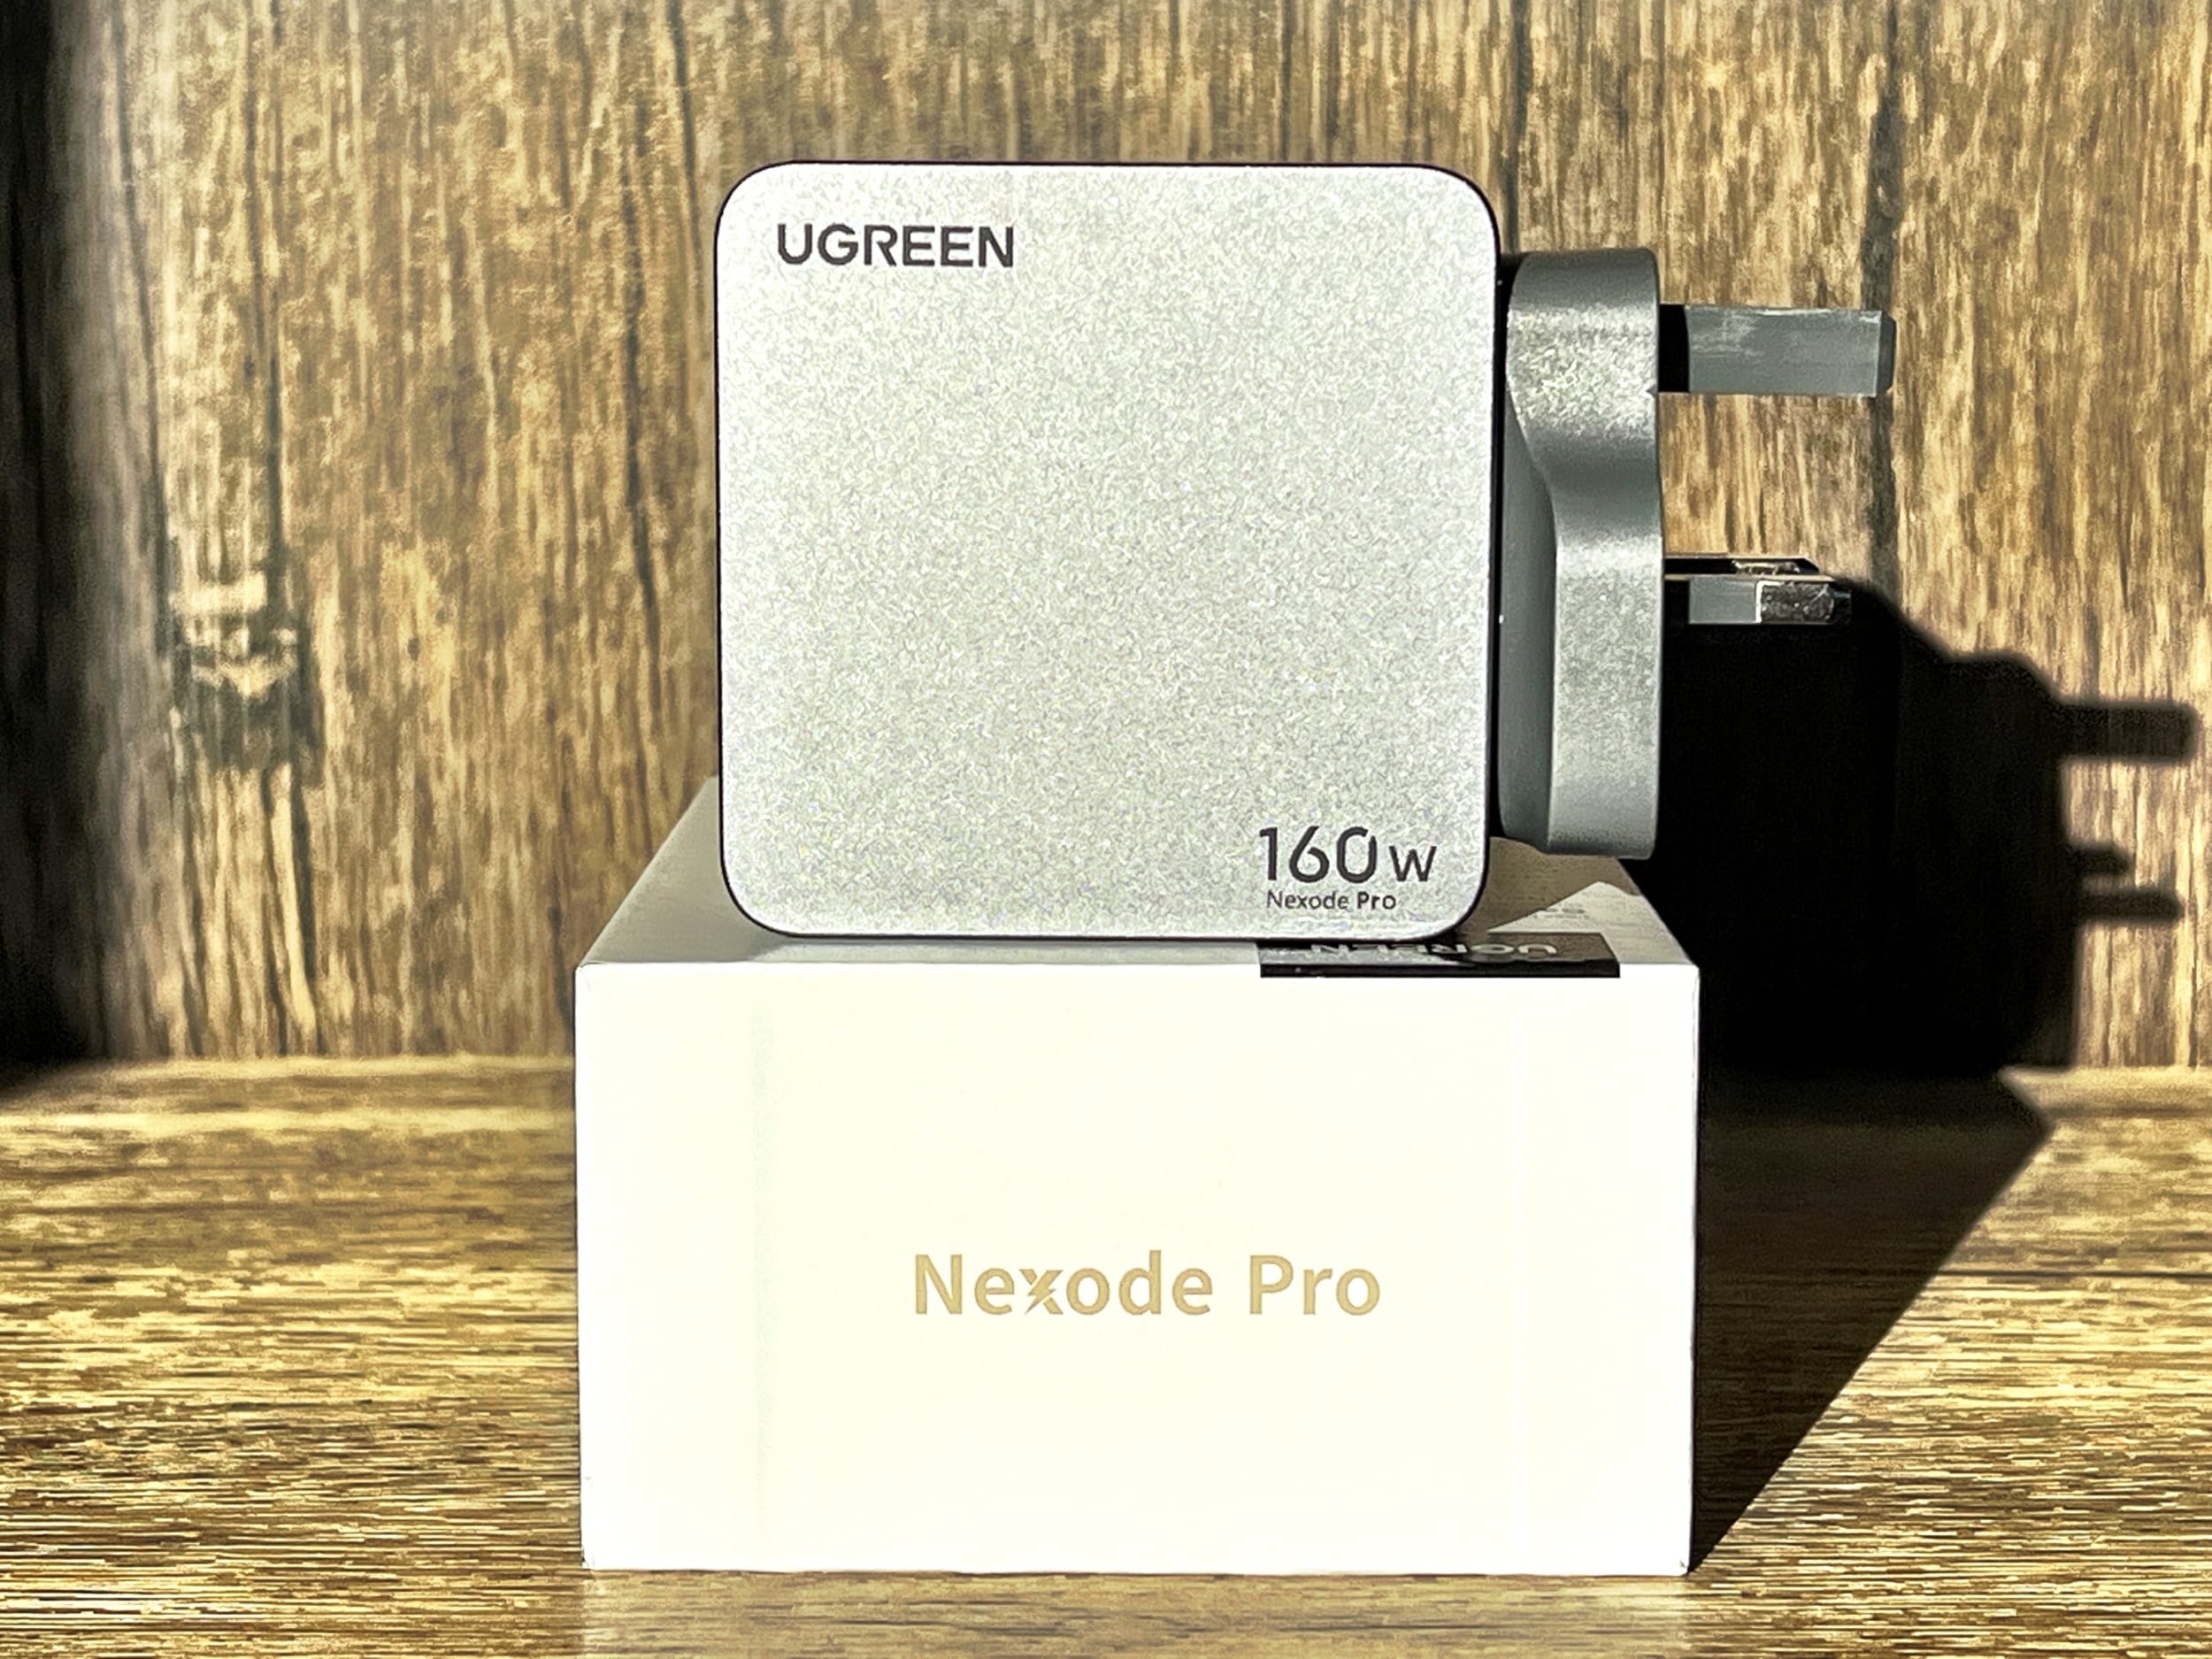 New Ugreen Nexode Pro 3 and 4 Port Chargers Reviewed - Irish Tech News